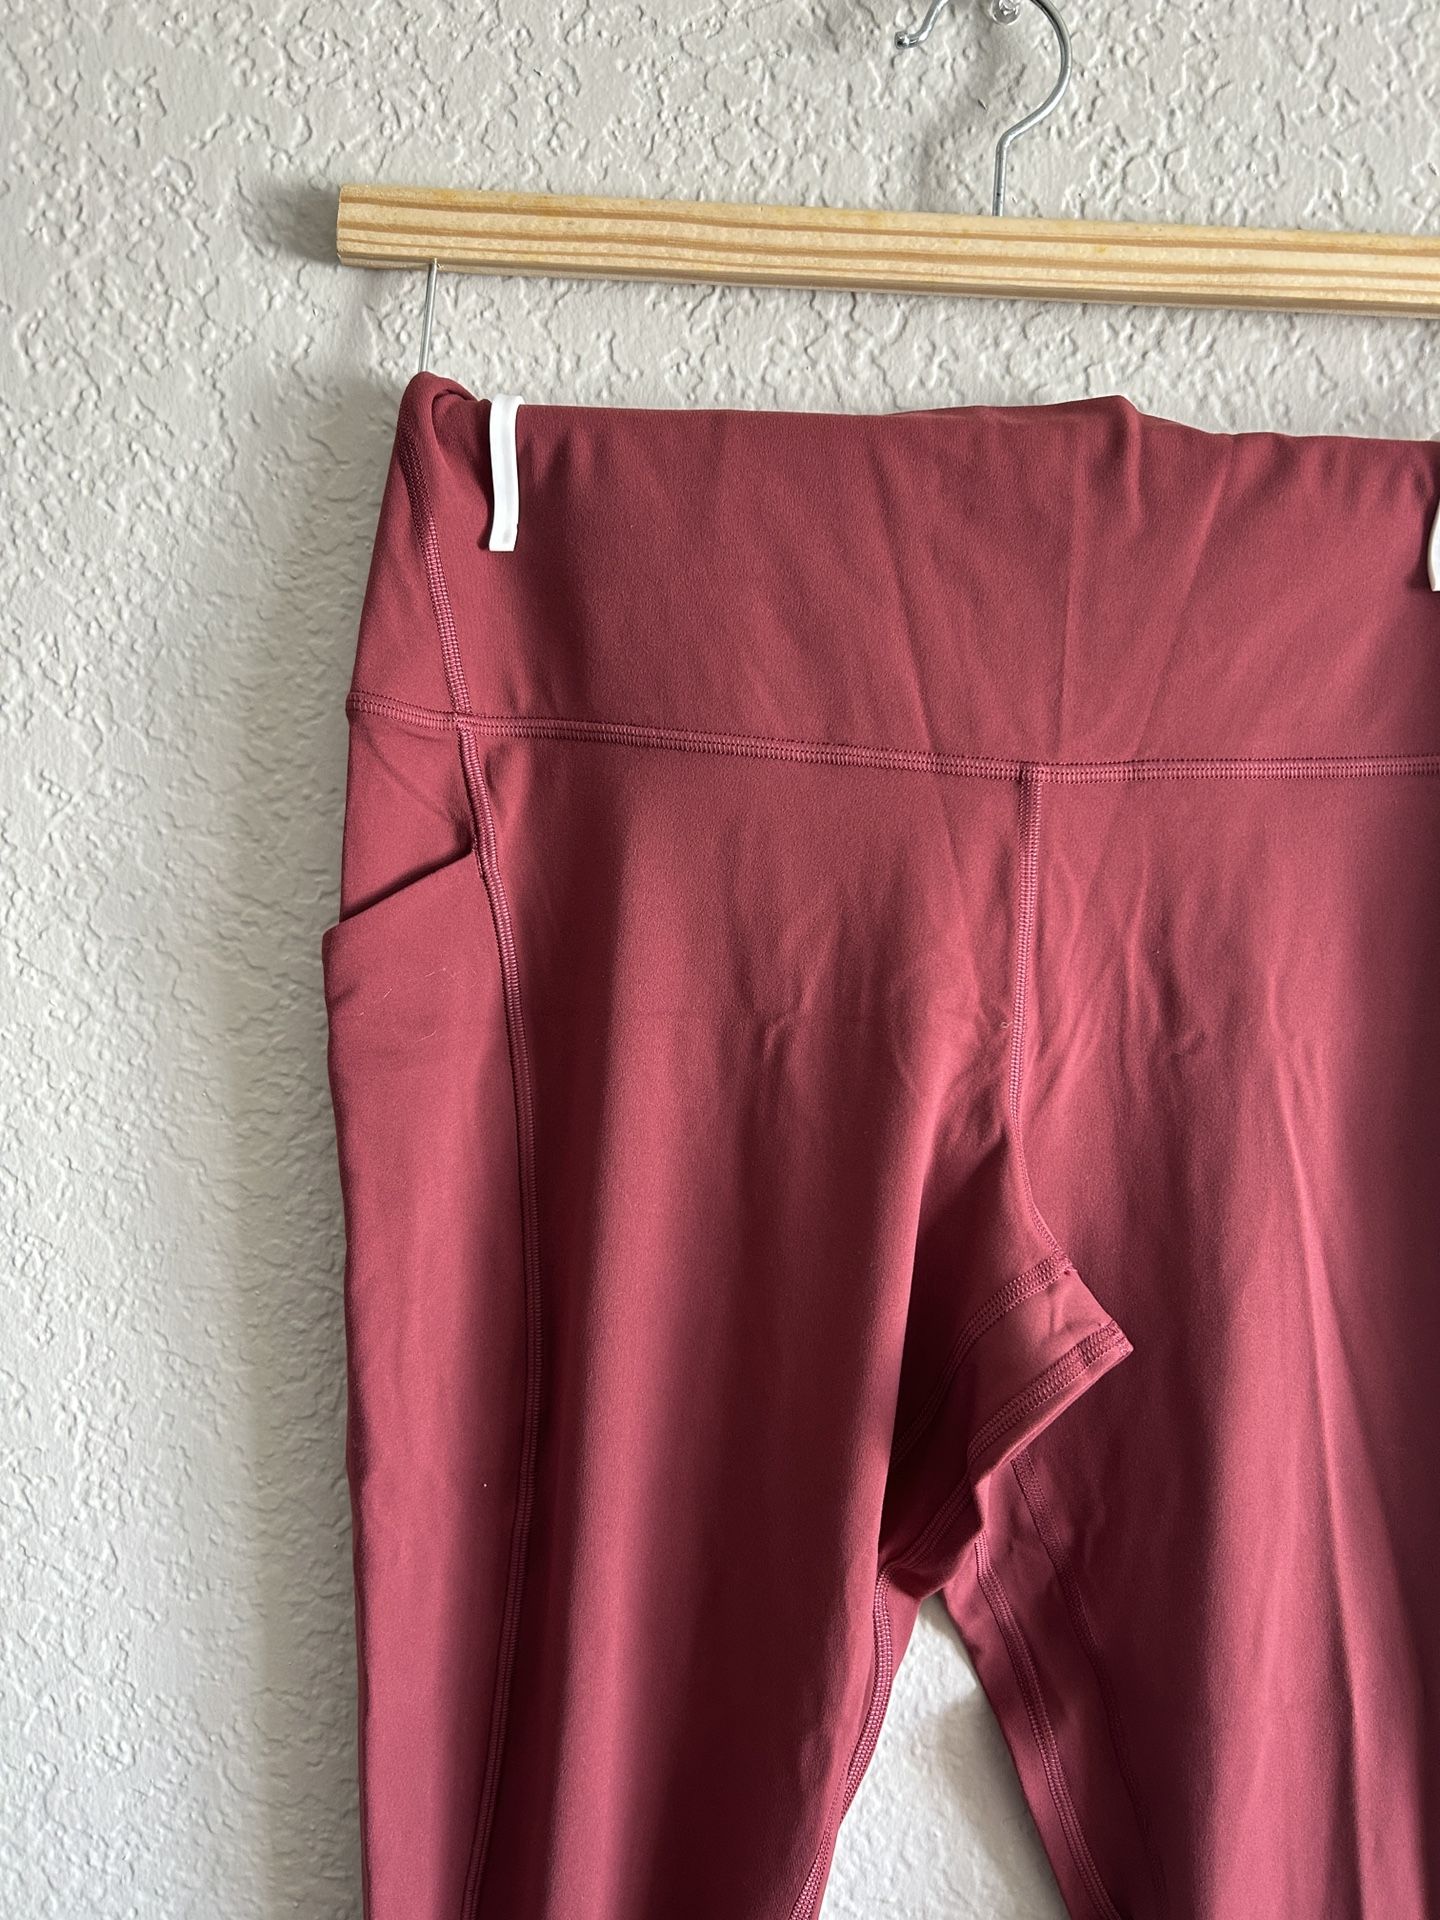 Lululemon Align High Rise Pant 28” Pockets for Sale in Alta Loma